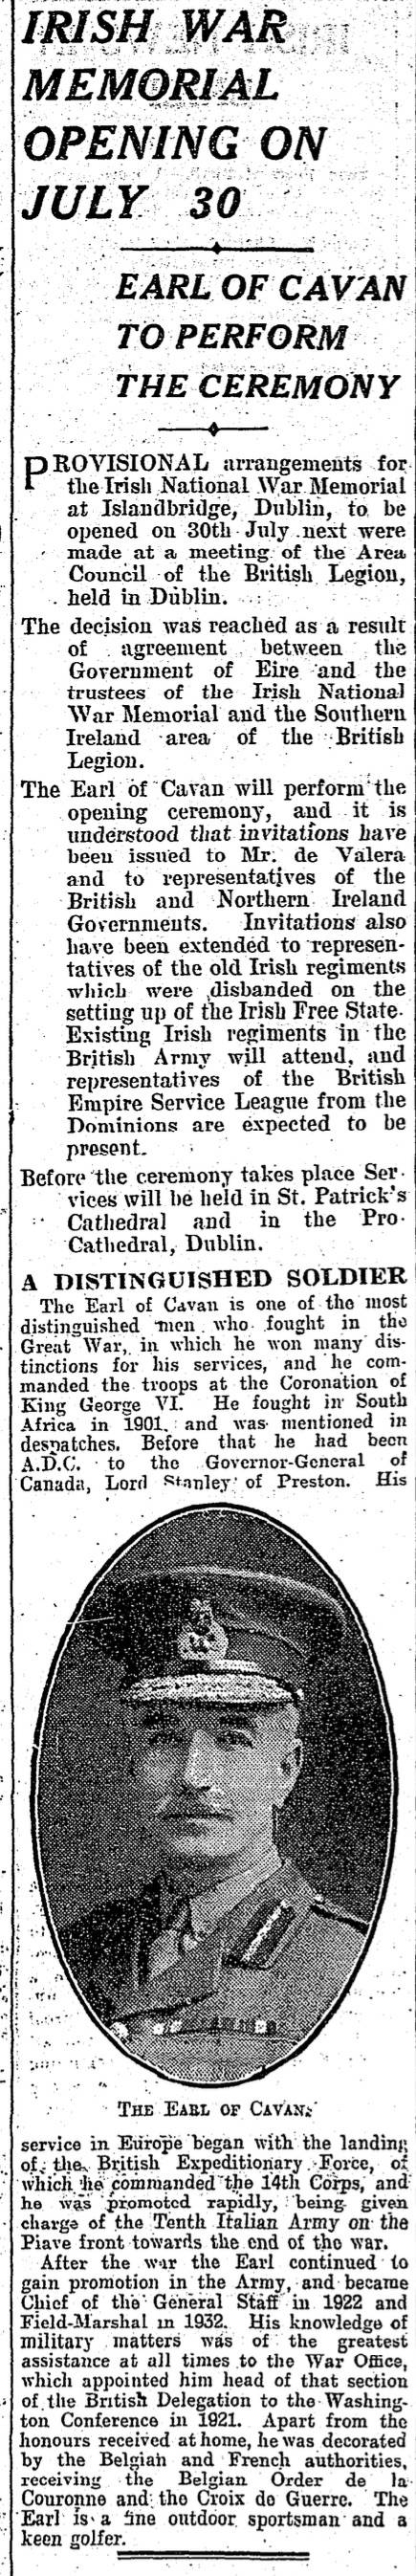 The Irish Times, 16 May 1939.